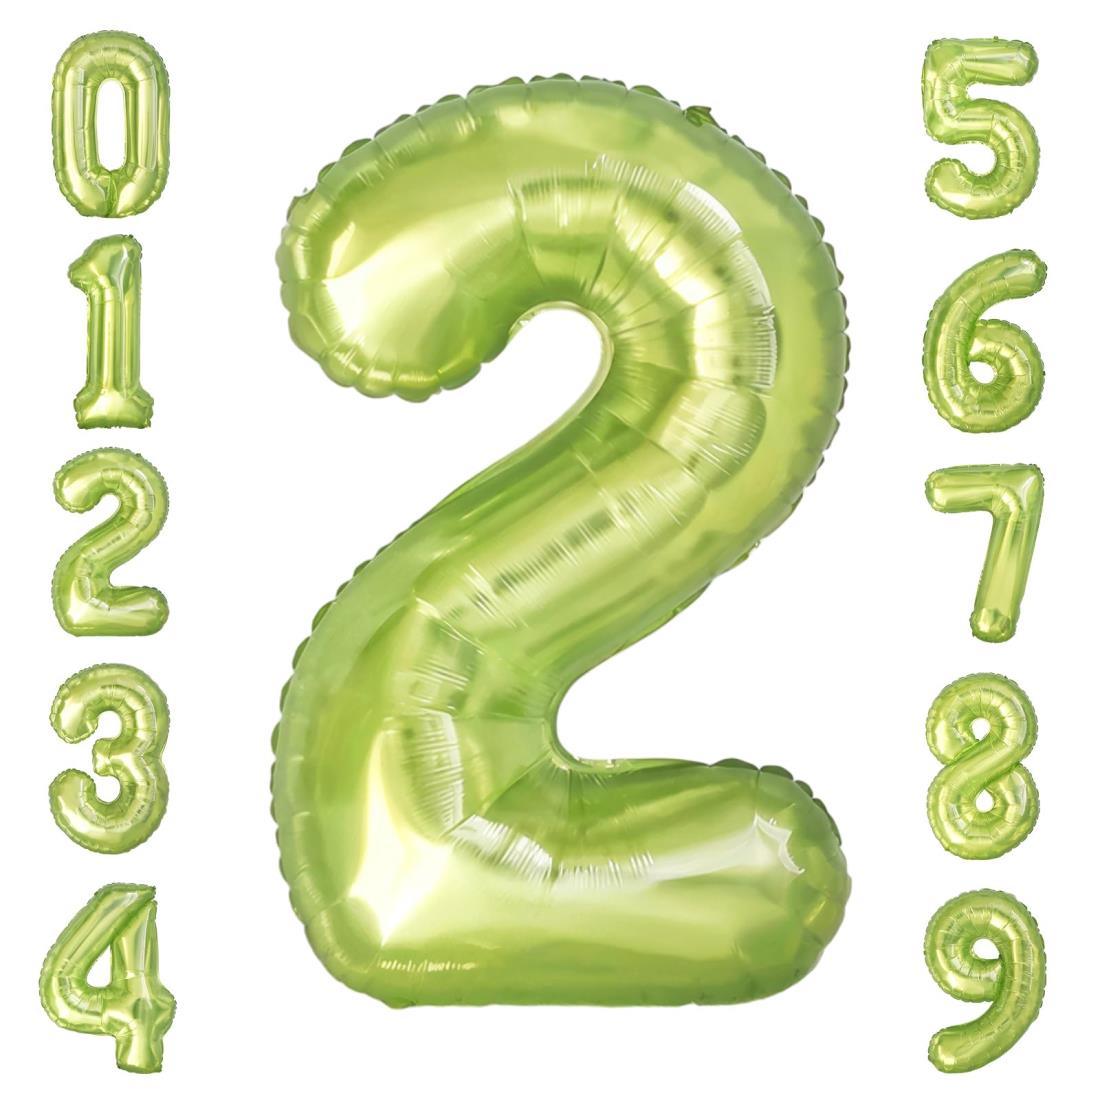 GRESATEK バルーン 数字 風船 誕生日 緑色 40インチ 大きい ナンバー2 バースデーバルーン 飾り付け 結婚式 パーティー 記念日 ウェディング クリスタル ゼリー クリスタル グリーン 2